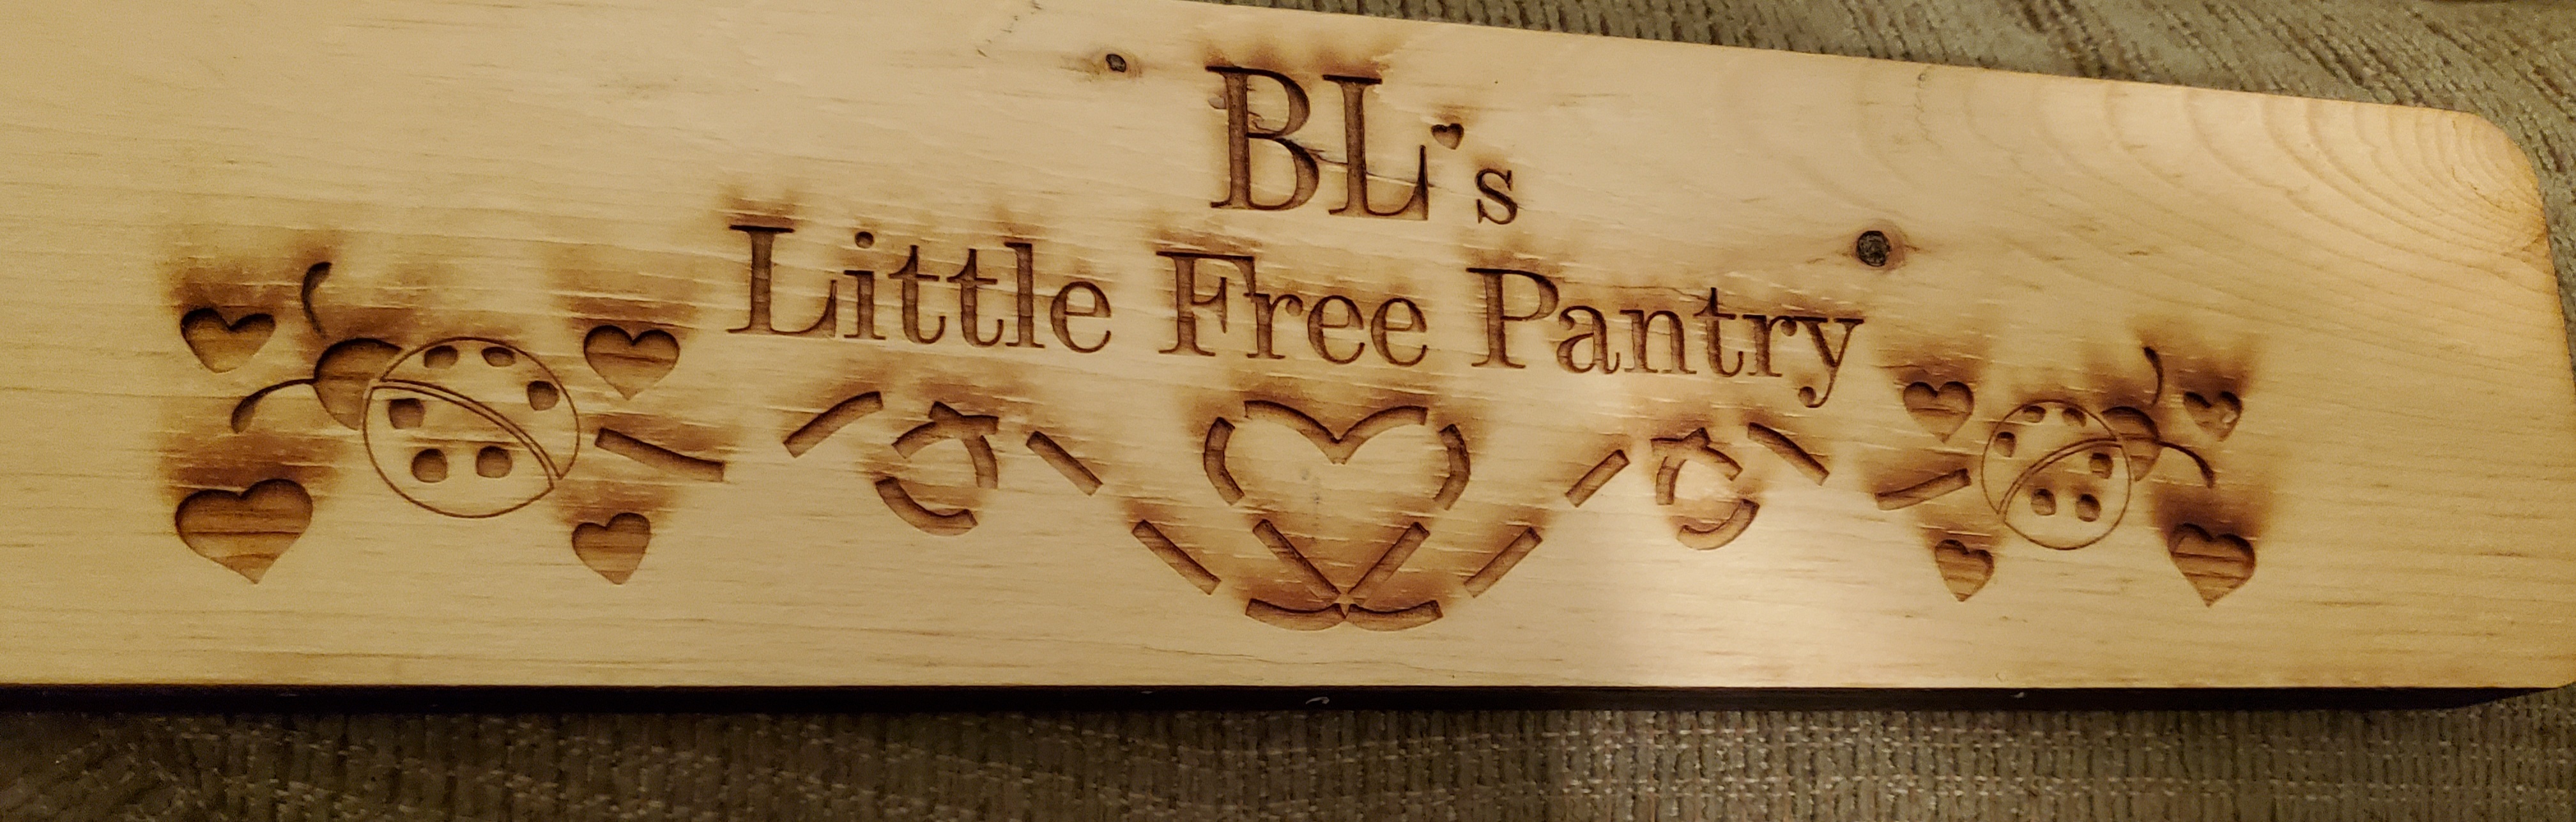 BL's little free pantry Photo 1